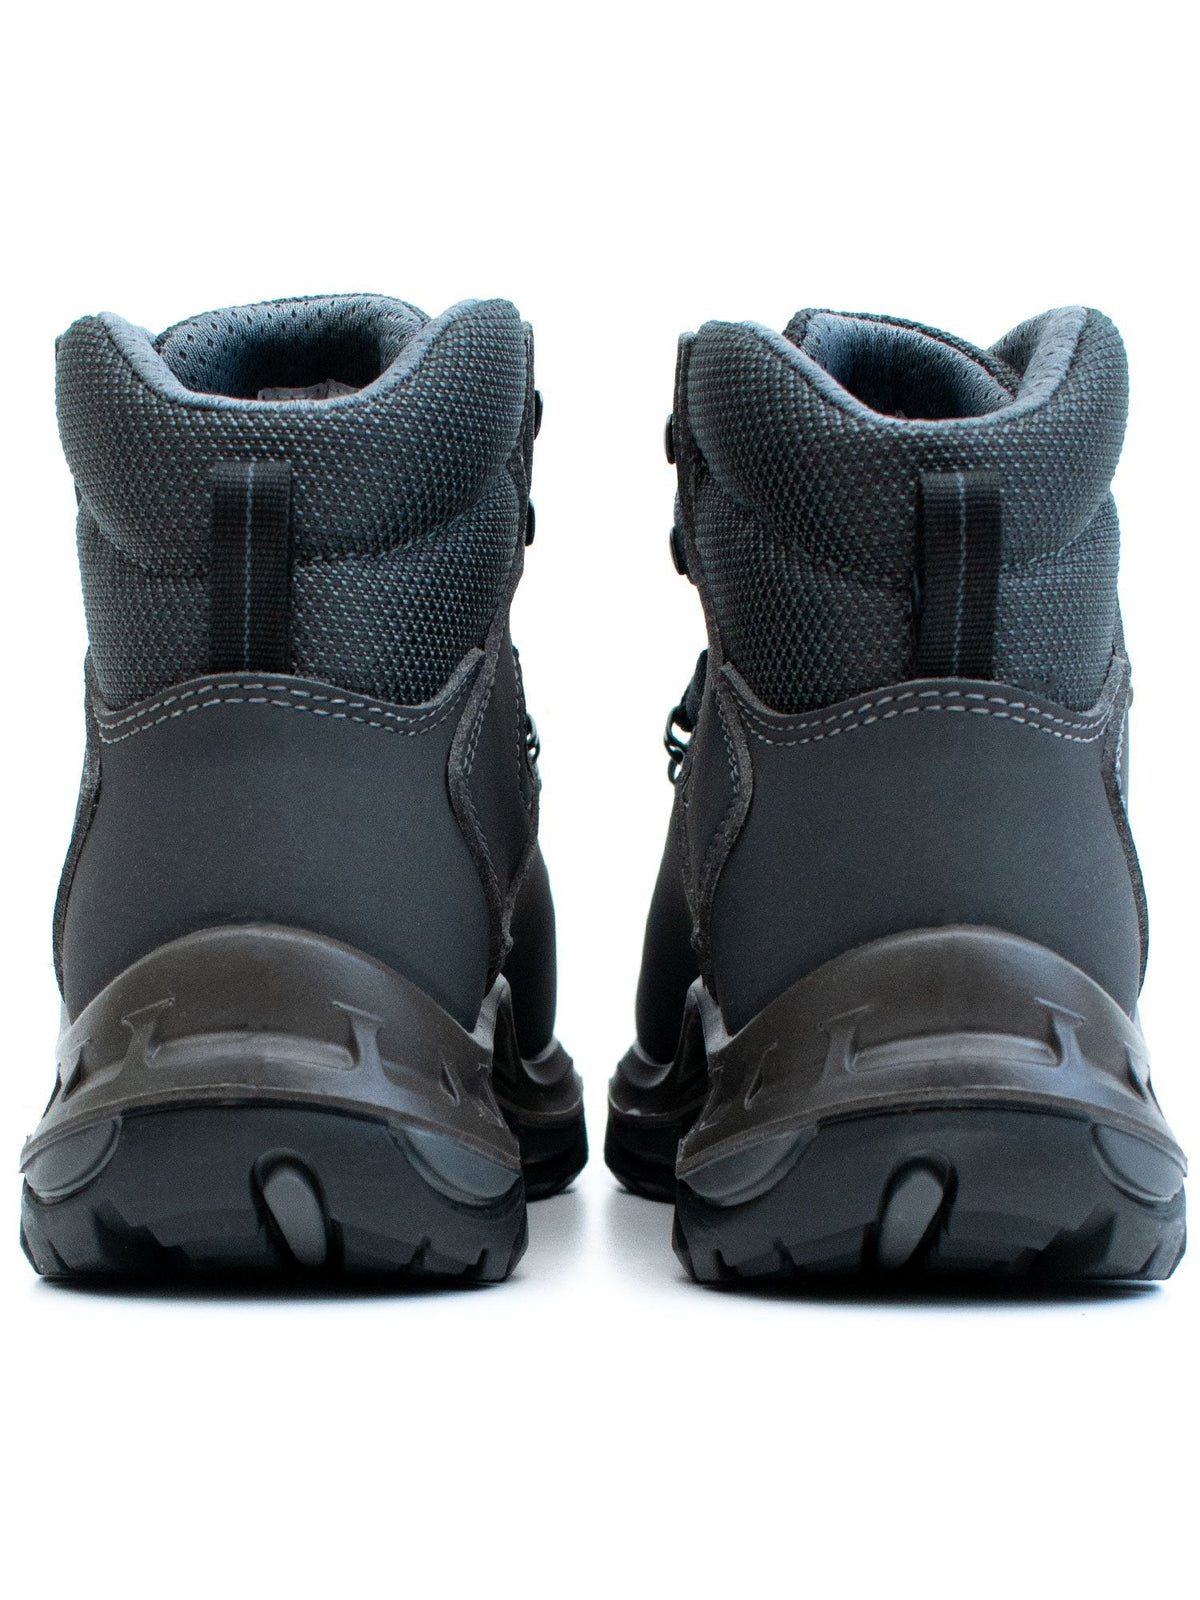 WVSport Waterproof Hiking Boots